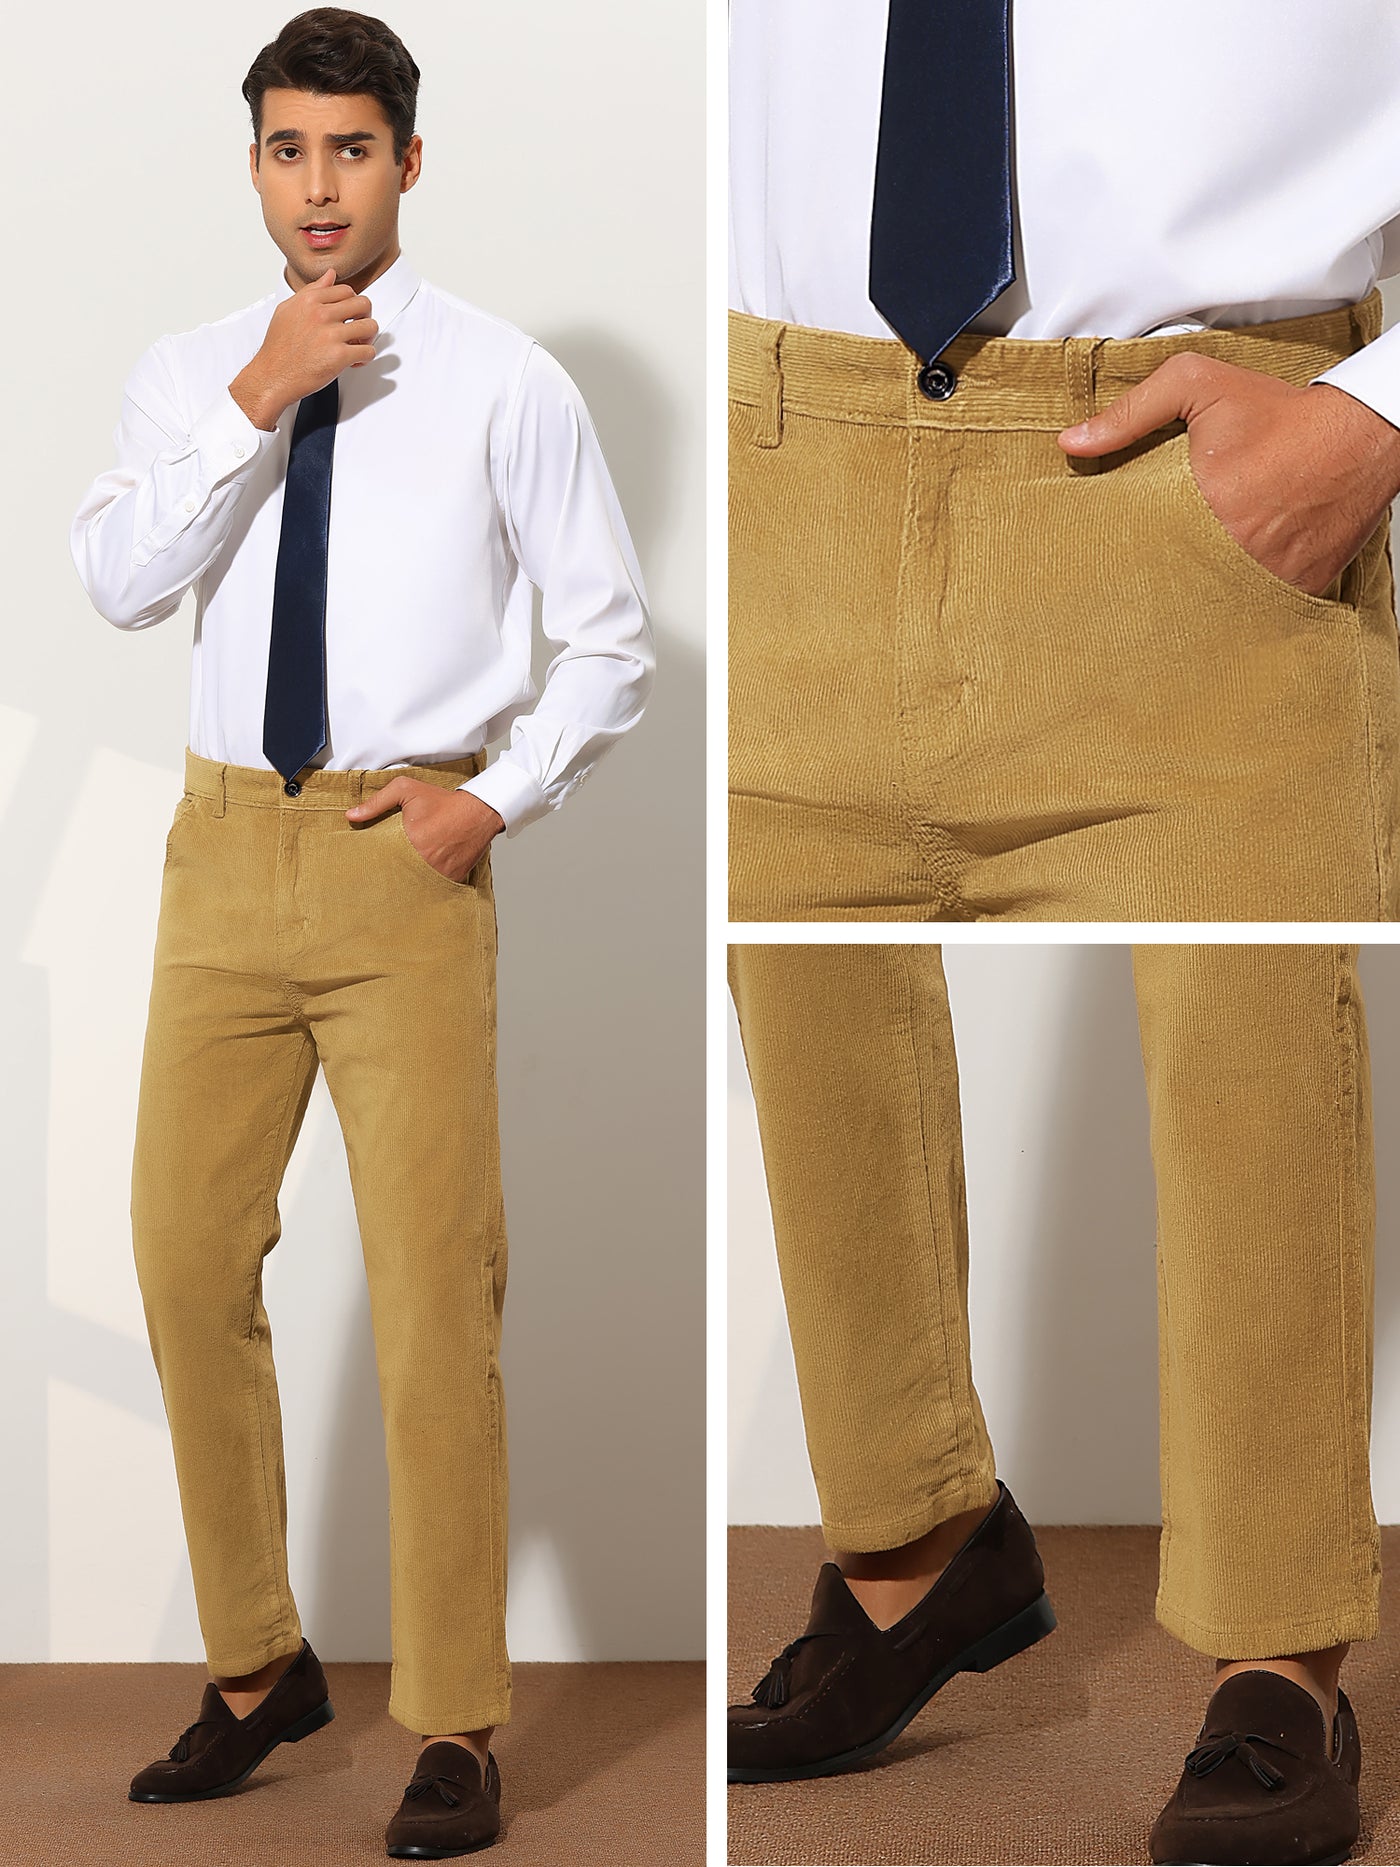 Bublédon Corduroy Dress Pants for Men's Straight Fit Flat Front Work Office Trousers